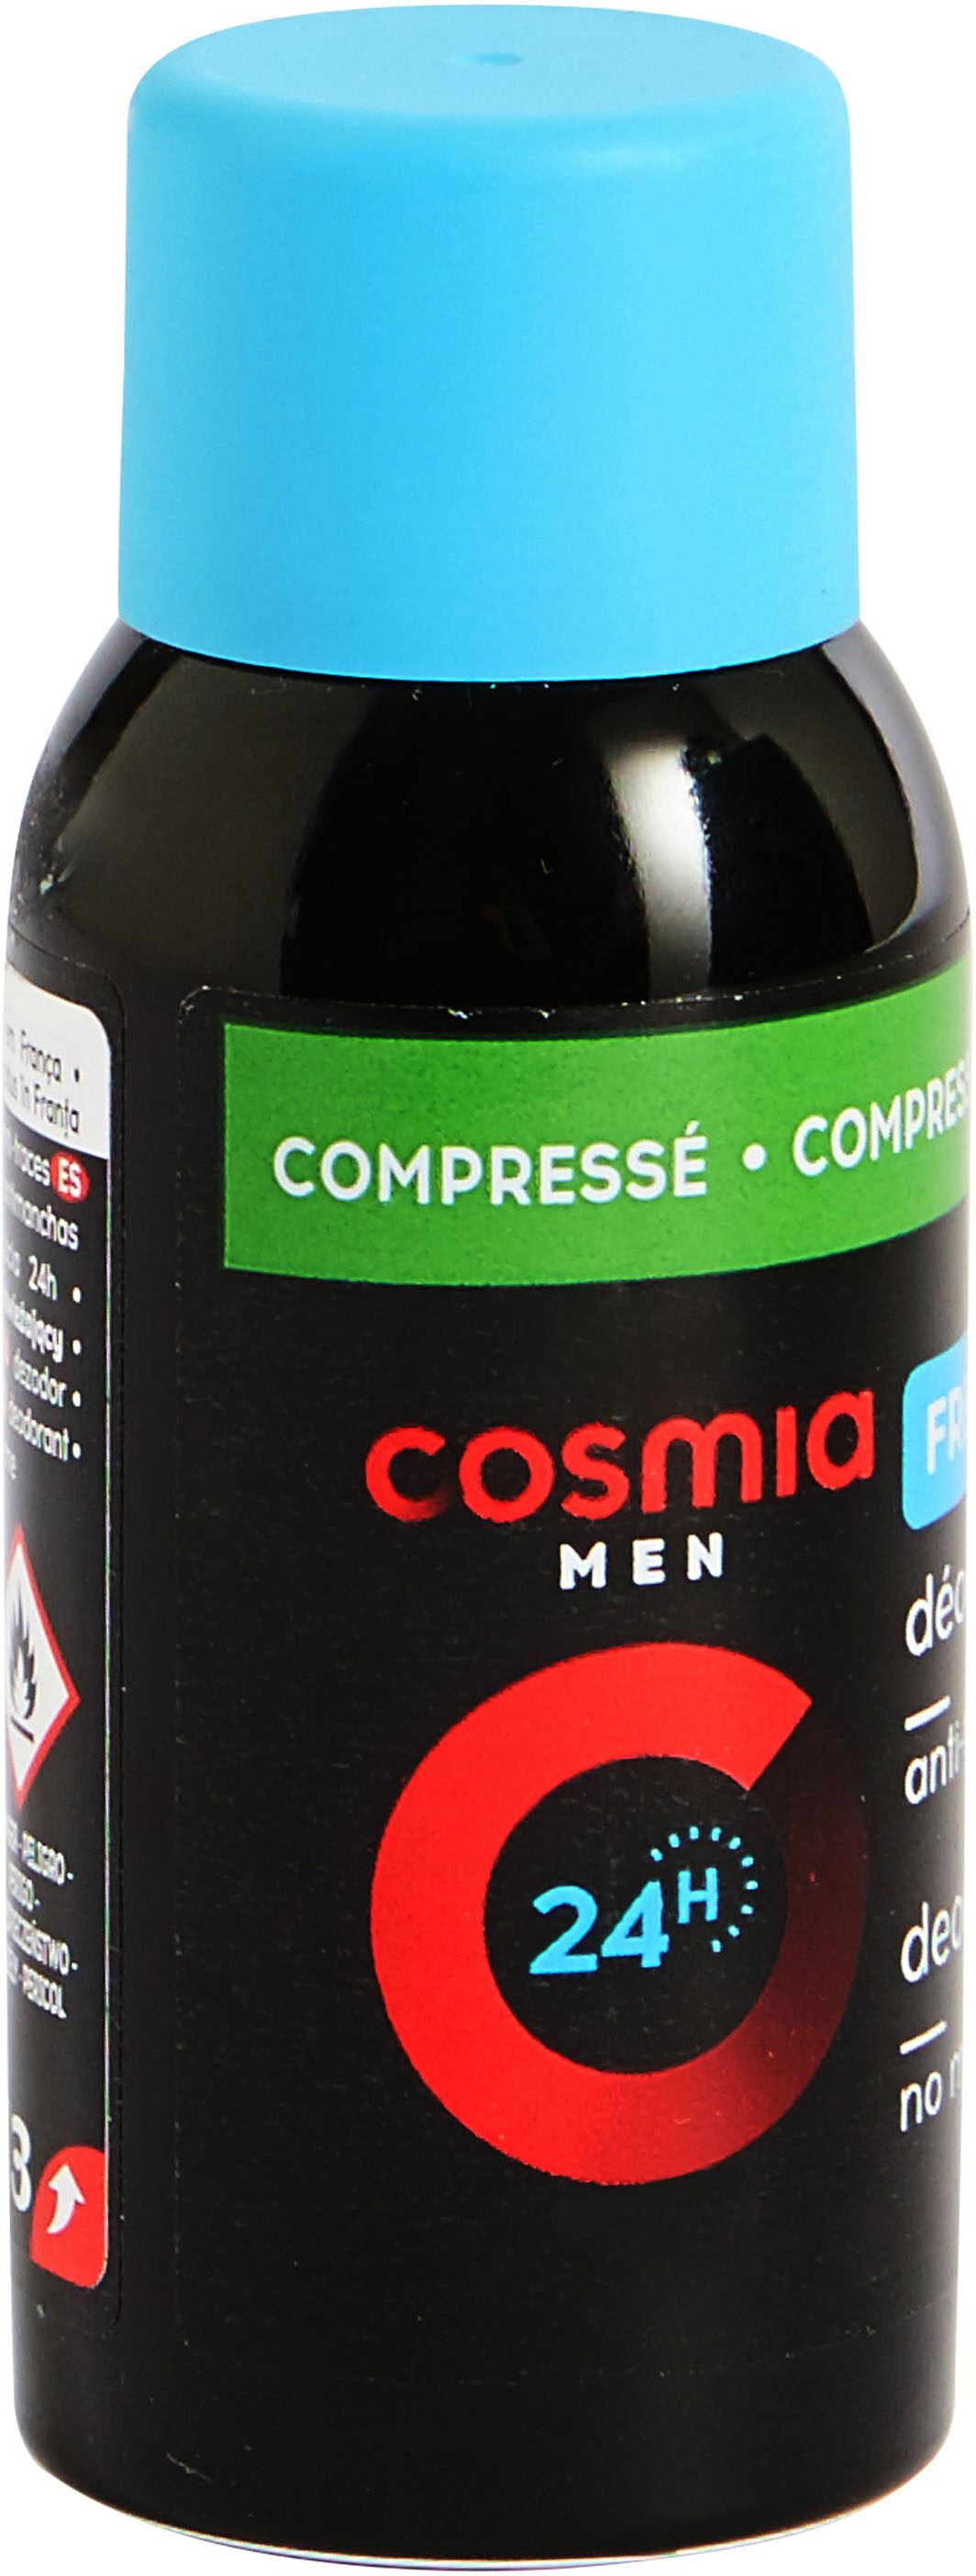 Cosmia deodorant homme atomiseur corps fraicheur 75 ml - Продукт - fr